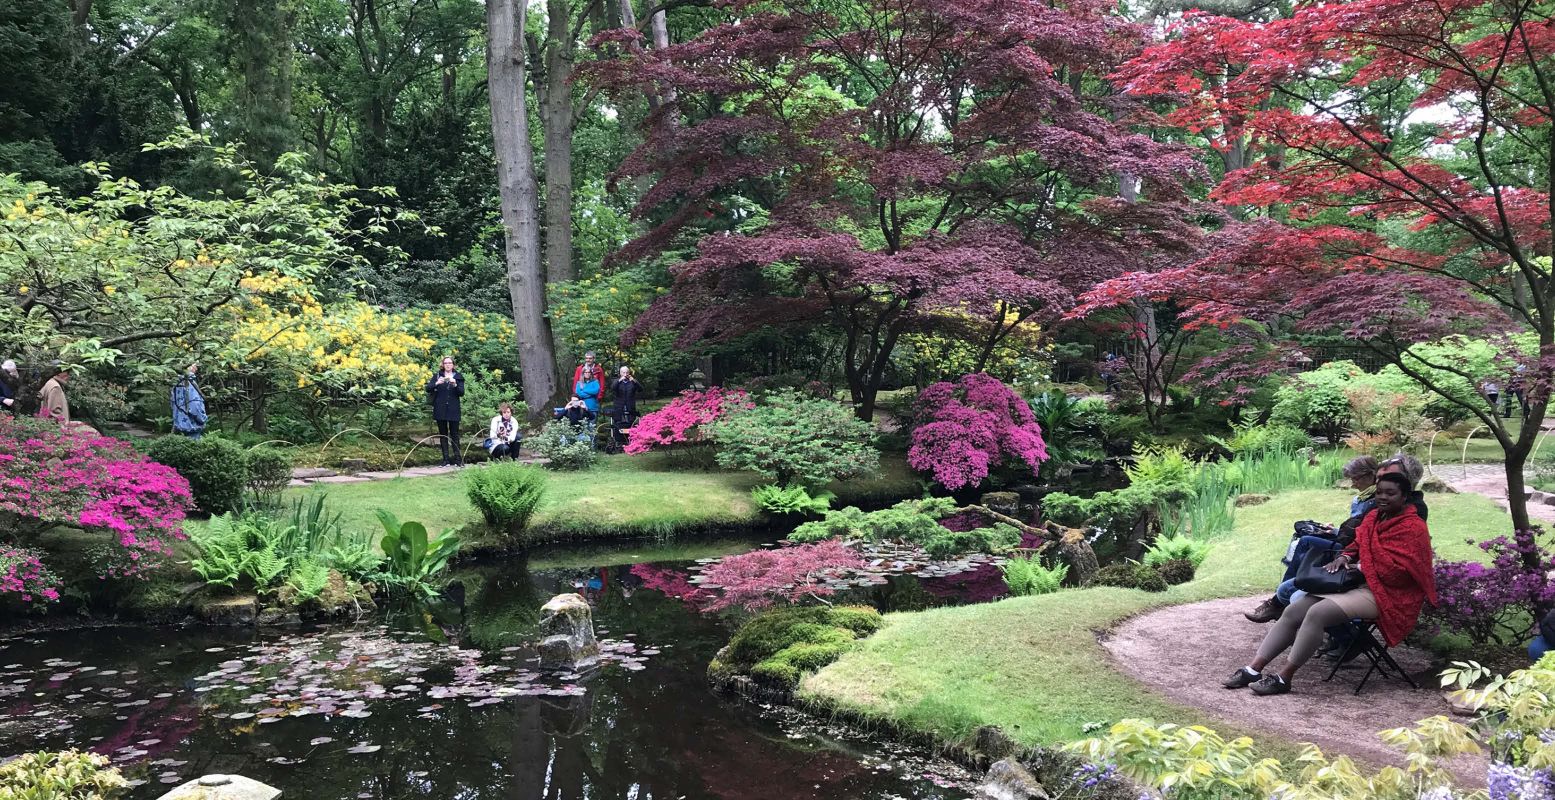 Bezoek de prachtige Japanse tuin vanaf dit weekend. Foto: Grytsje-Anna Pietersma